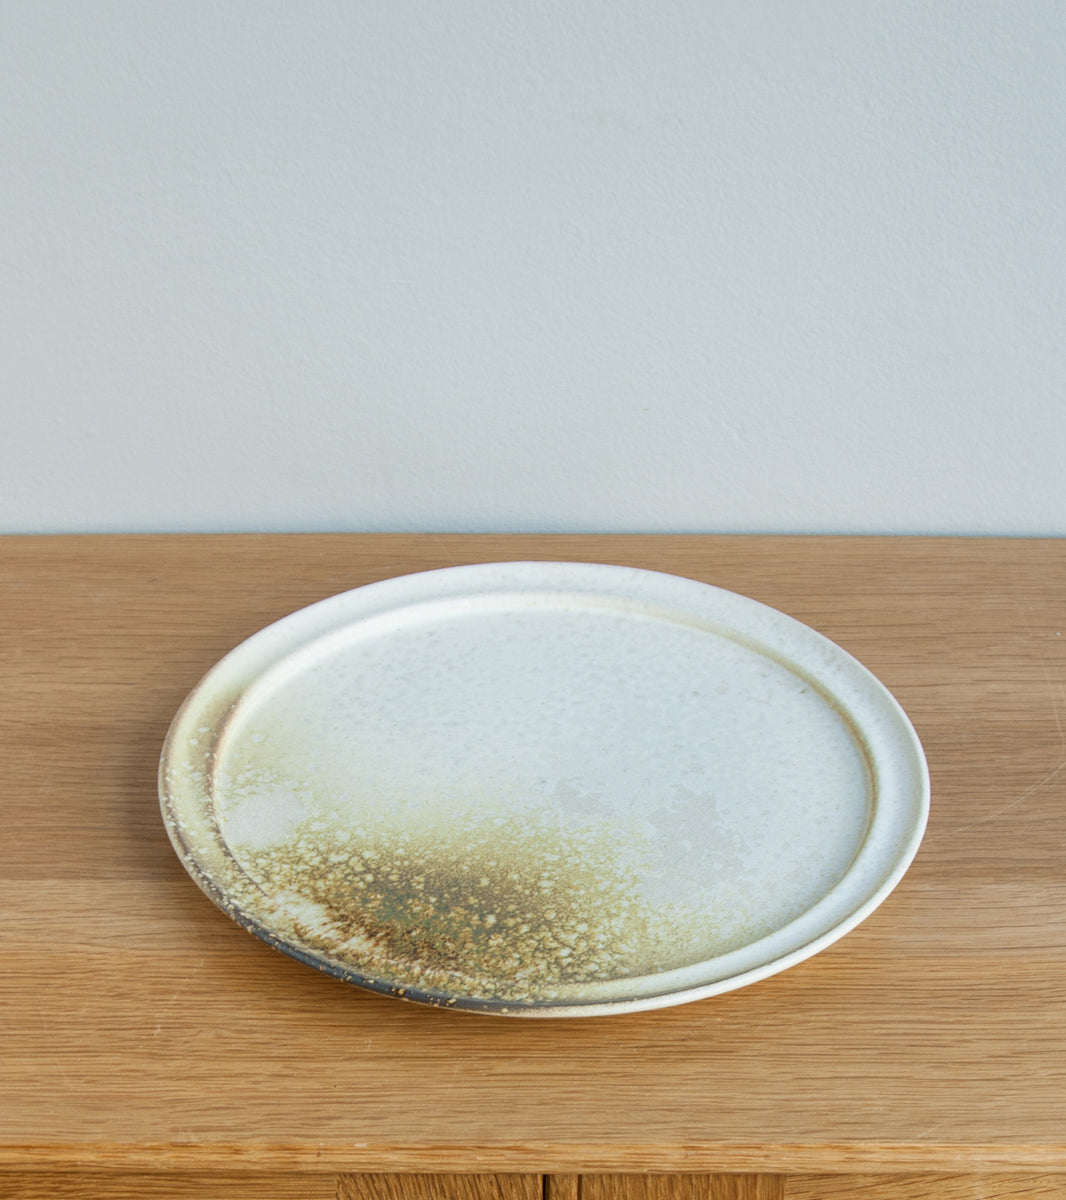 Rimmed 'Noma' Plate White & Yellow Glaze Kasper Würtz - Image 1